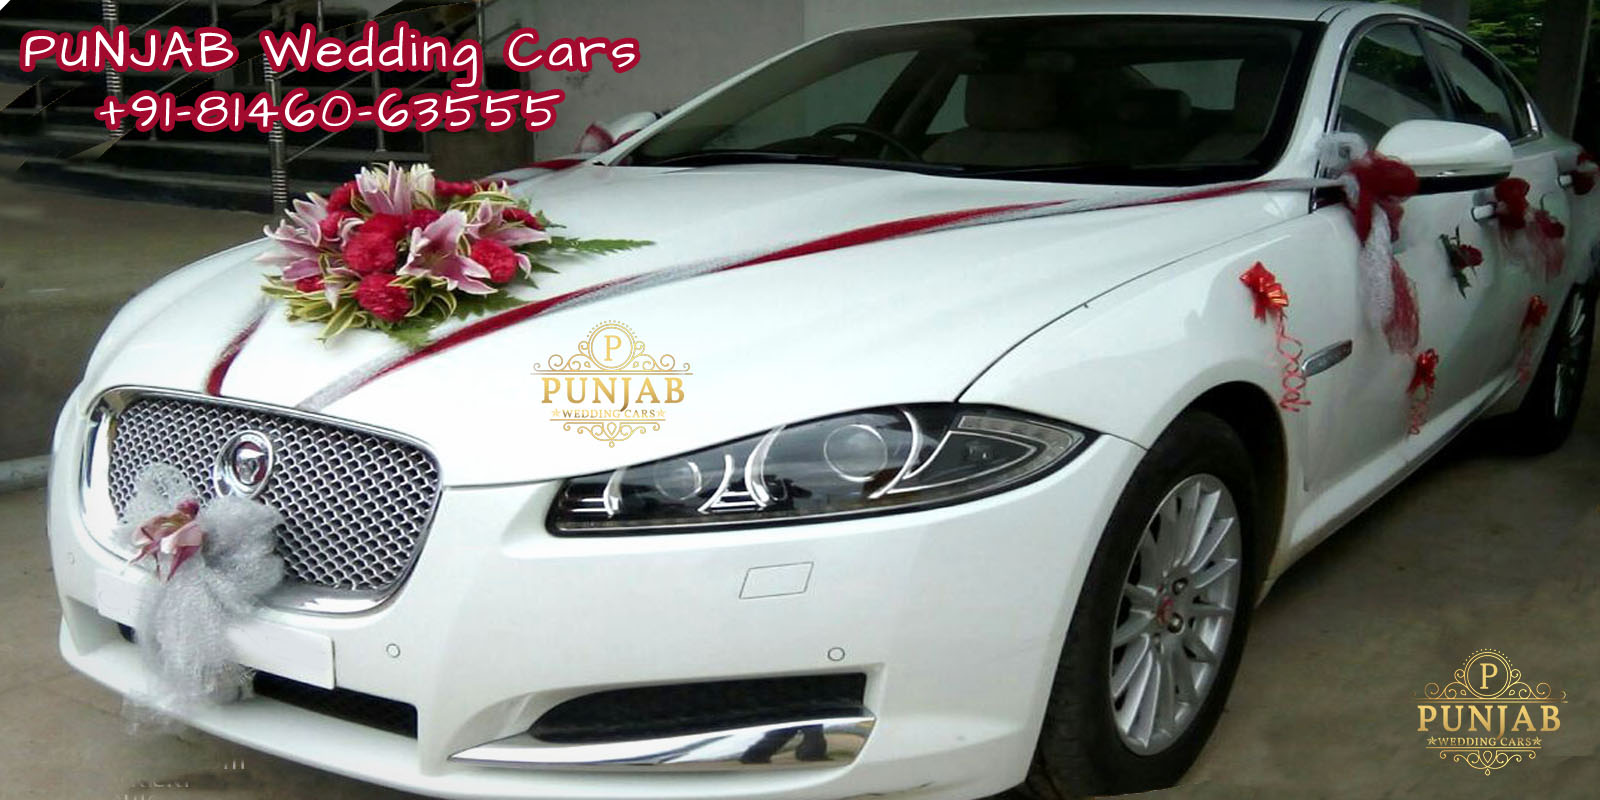 WEDDING CARS White Jaguar XF Luxury Edition Decorated White Jaguar XF Luxury Edition Decorated for wedding rental in Punjab, India